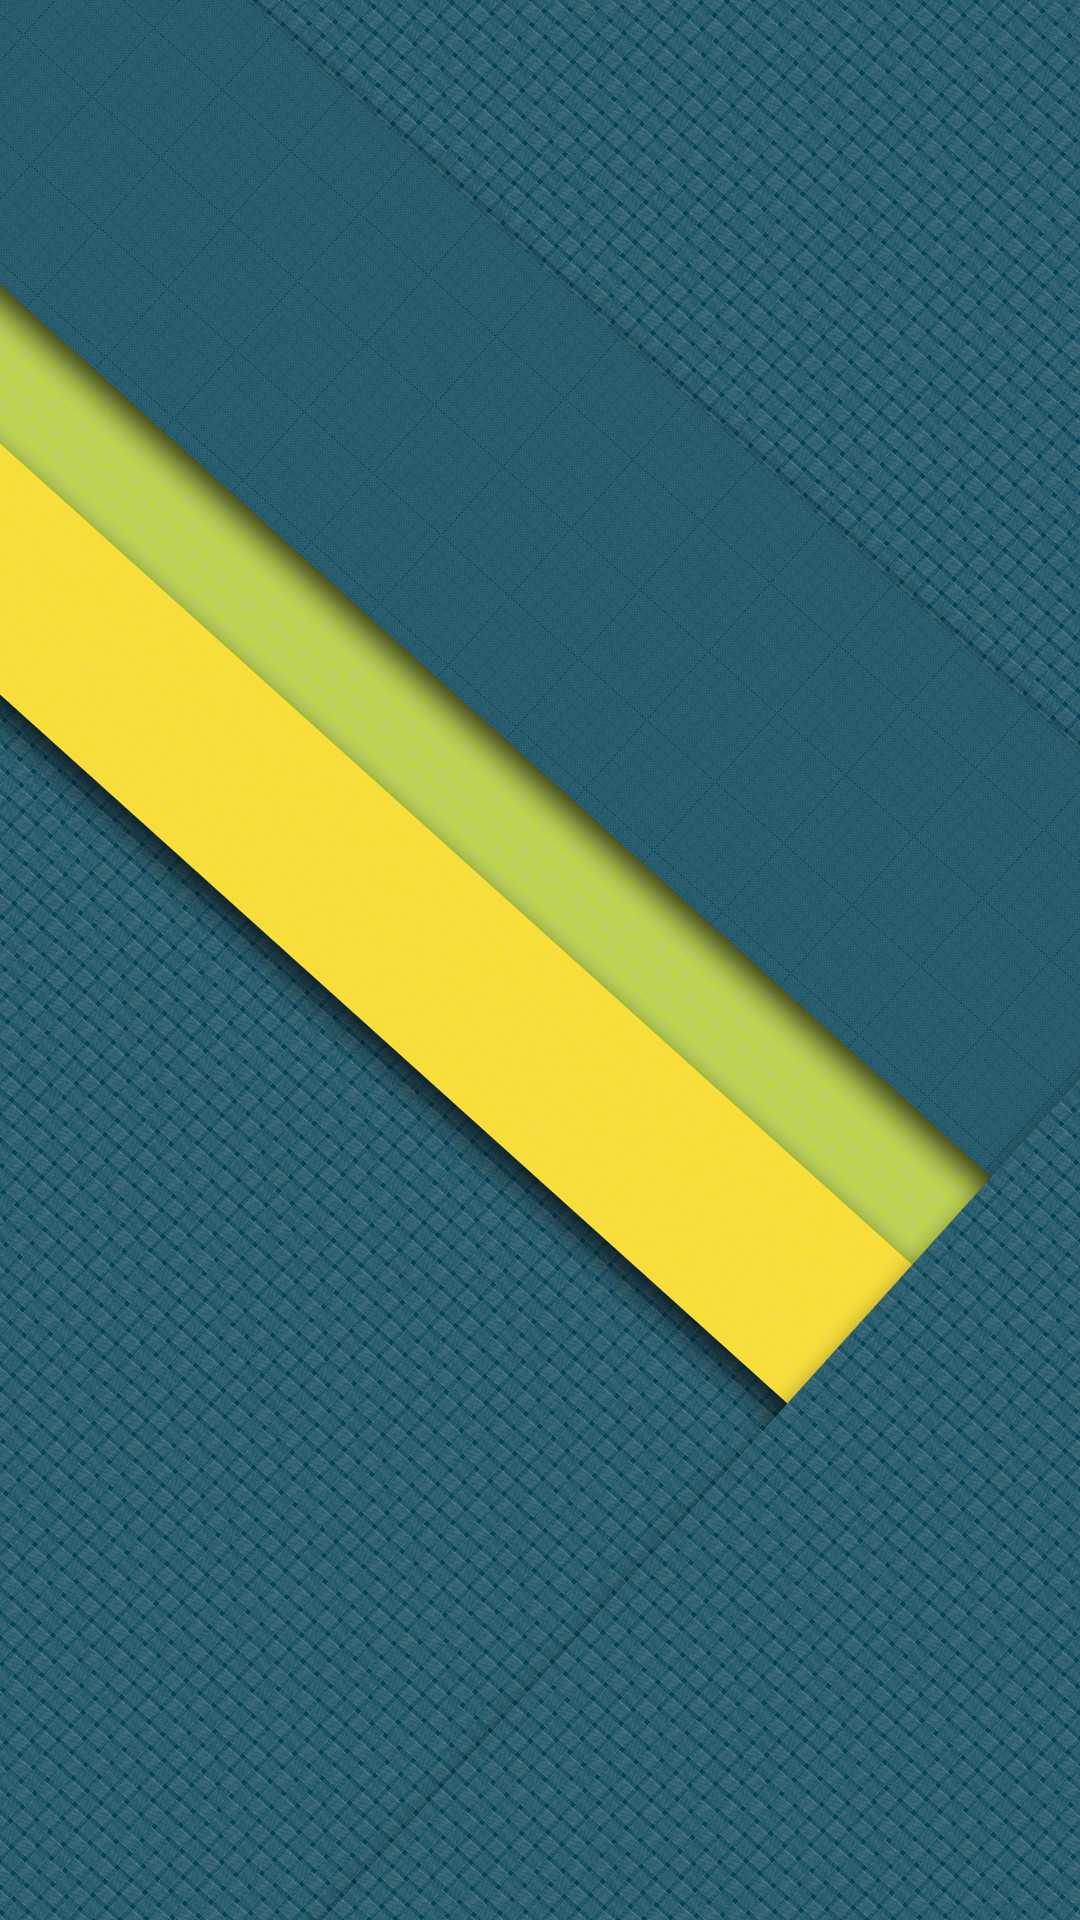 Material Design Mobile Hd Wallpaper13 - Colorfulness - HD Wallpaper 